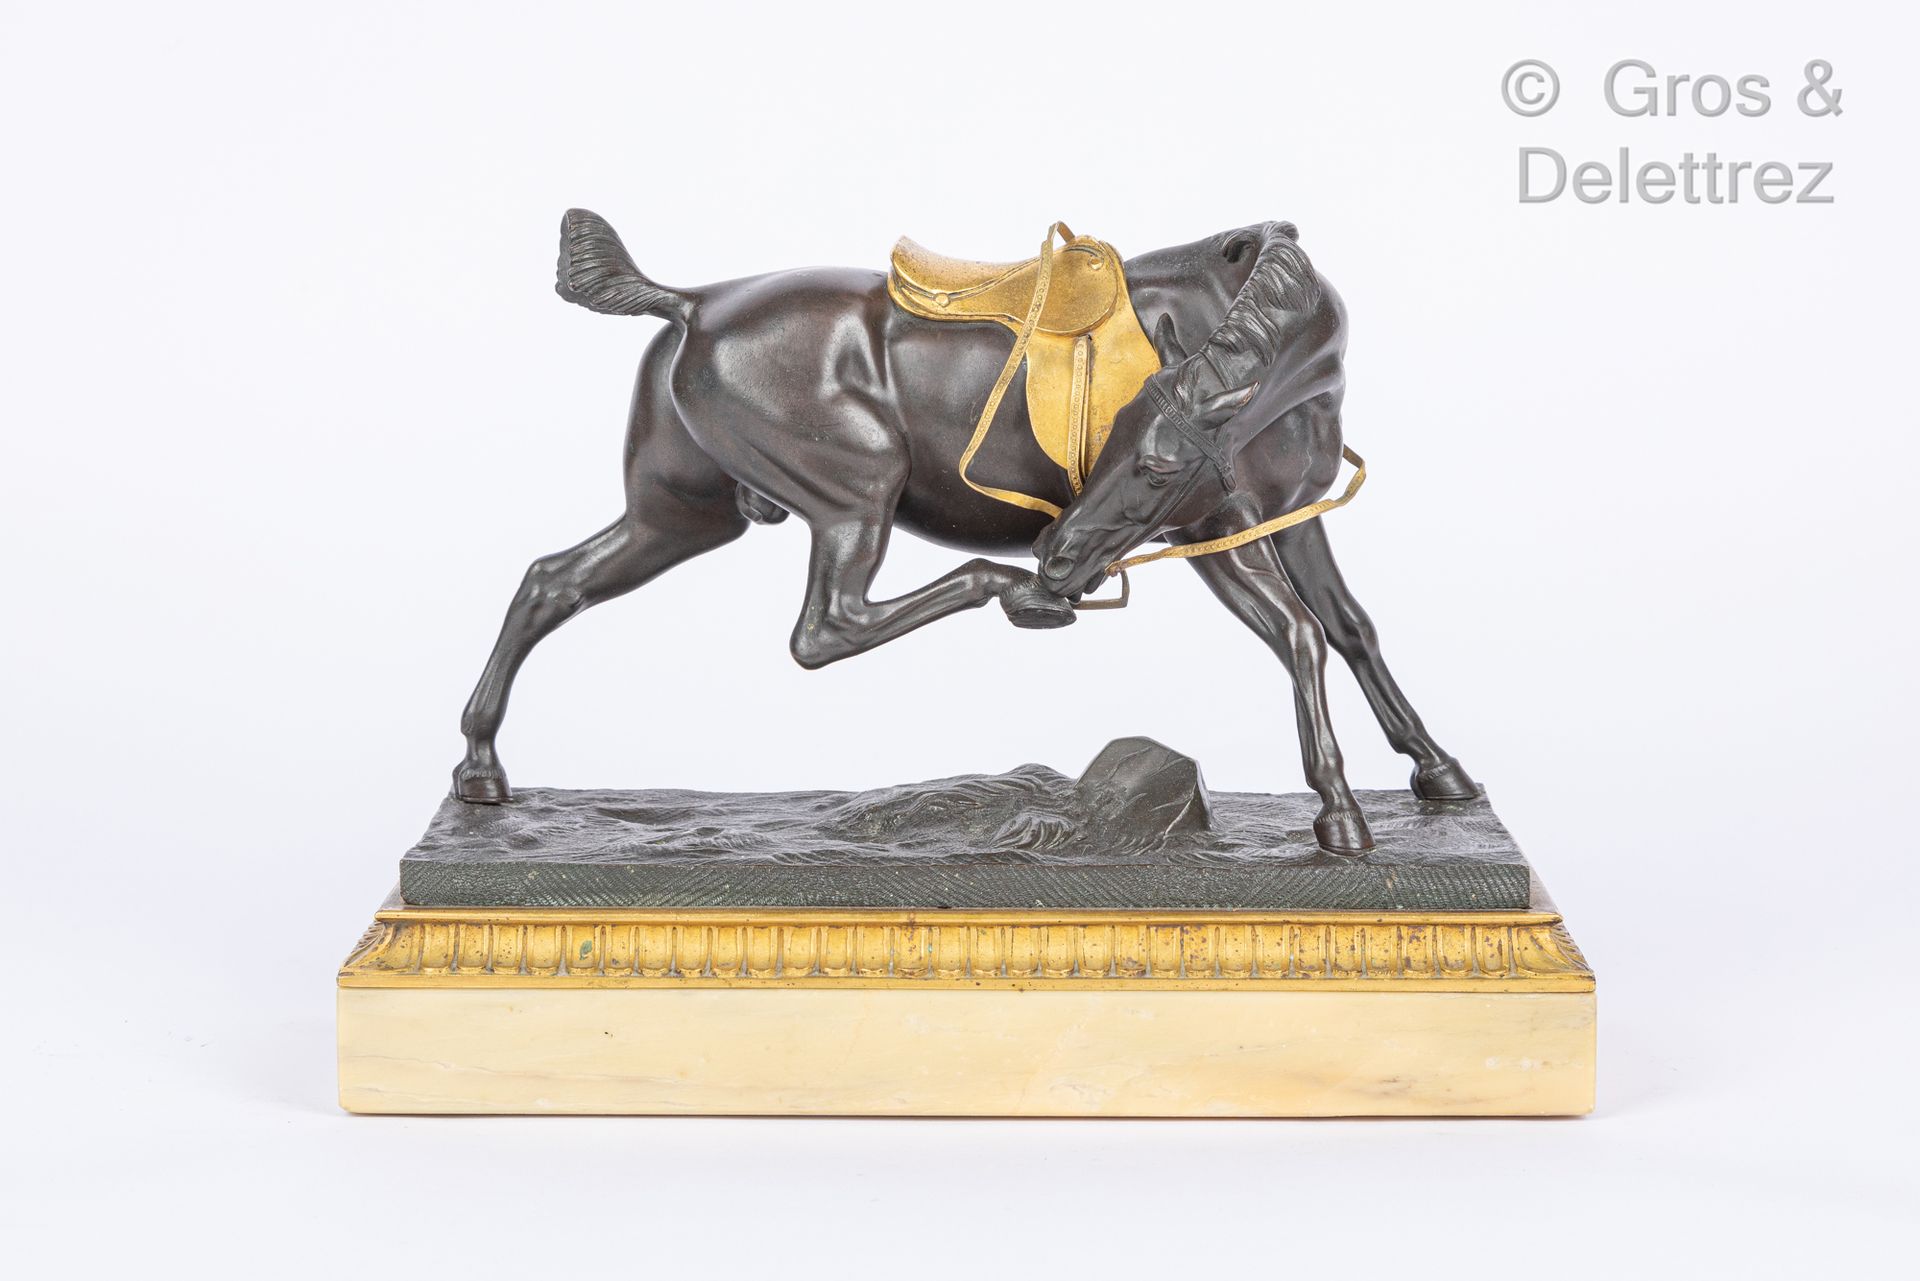 Null 卡勒-韦尔纳的风格

狩猎马

证明是用青铜和鎏金青铜制成的。安装在一个镀金的青铜底座上。米色大理石的柜台底座。

20 x 27 x 11,5 cm&hellip;